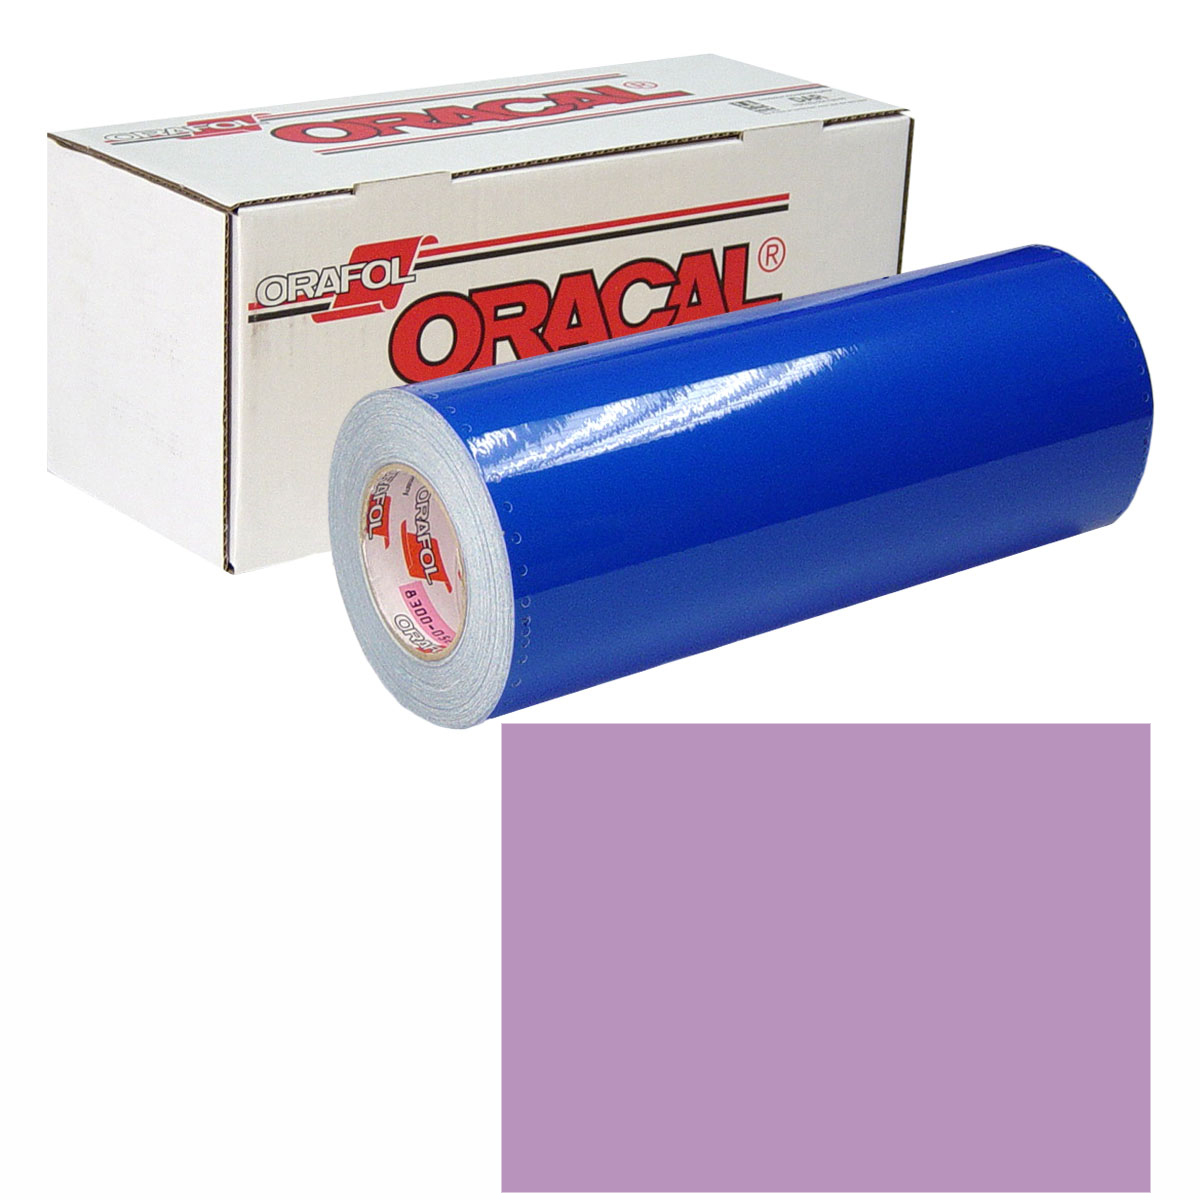 ORACAL 631 Unp 48in X 10yd 042 Lilac